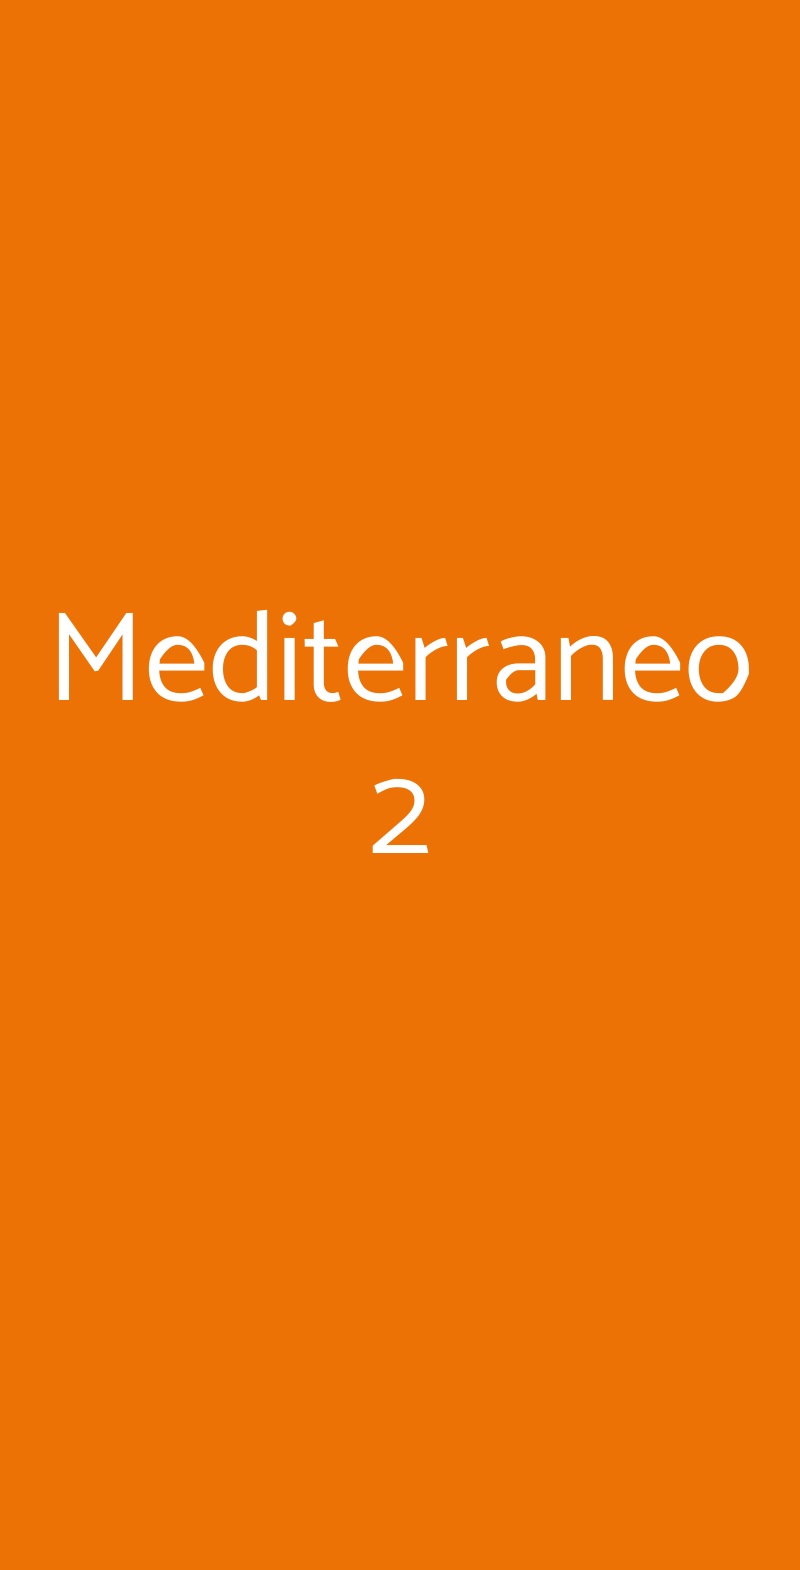 Mediterraneo 2 Milano menù 1 pagina